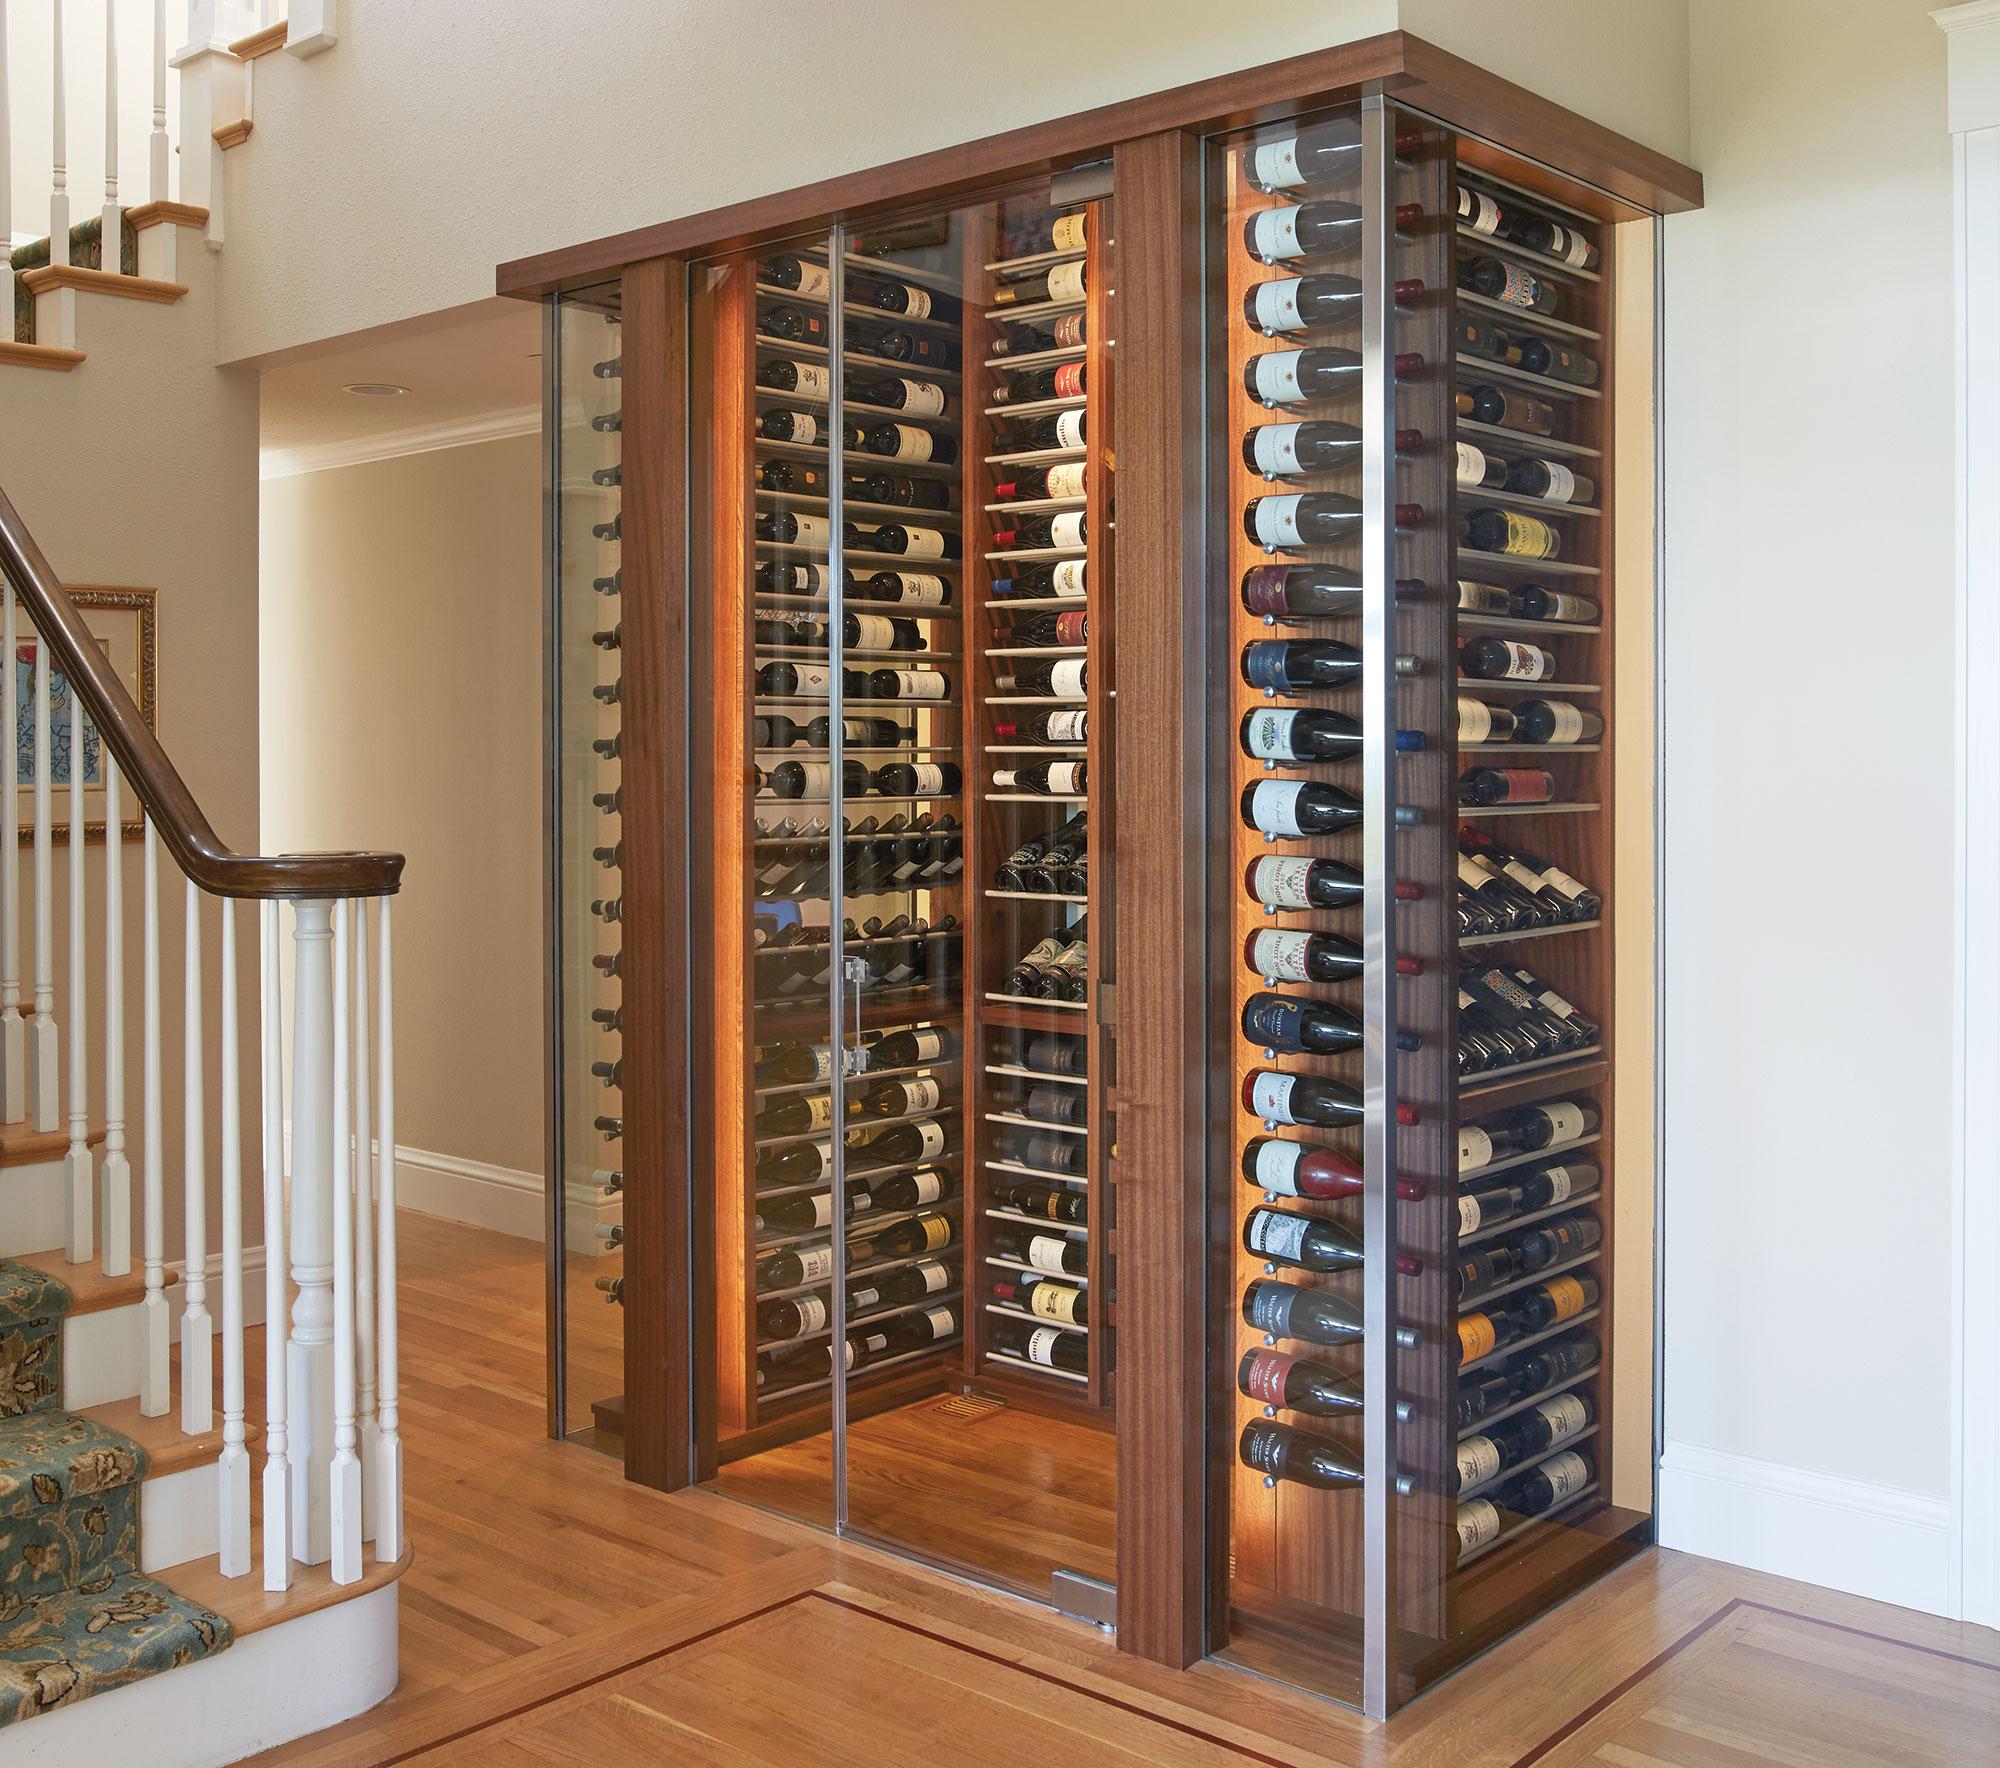 Beautiful glass enclosed wine cabinet